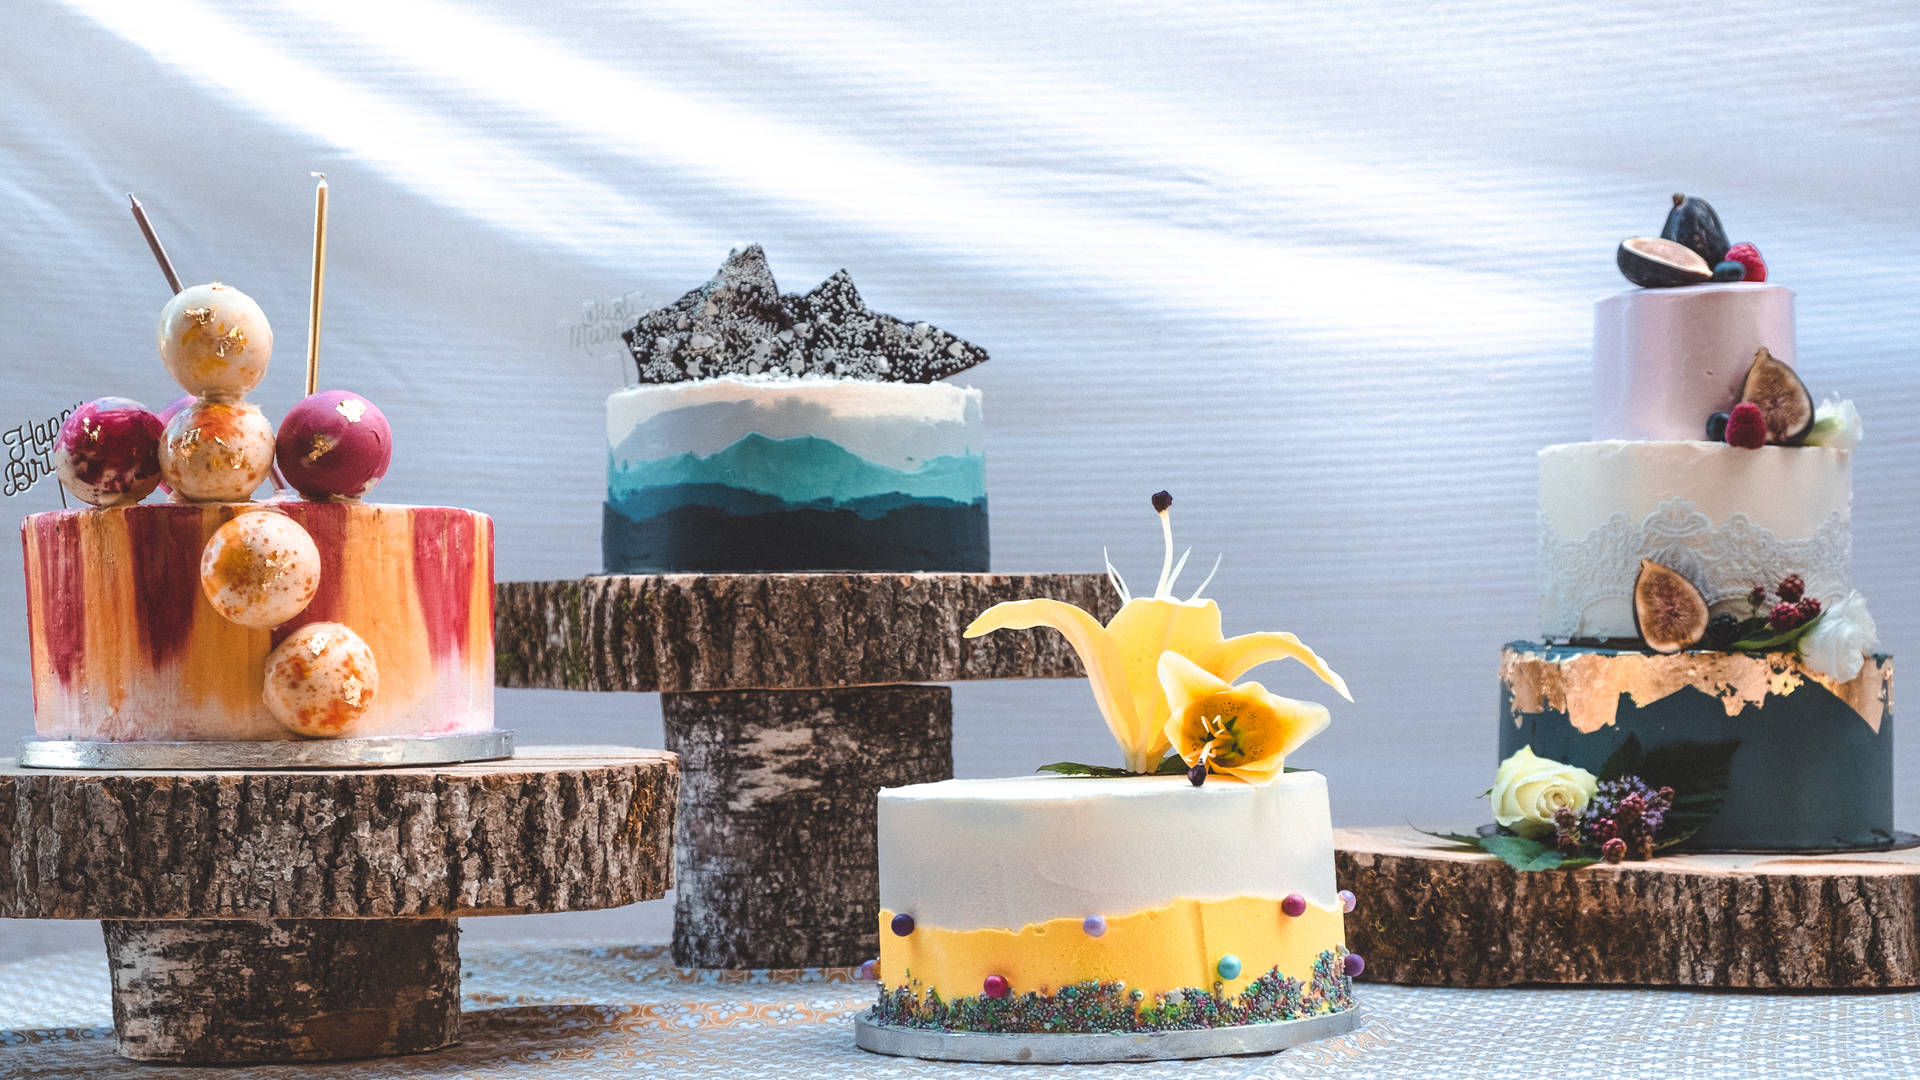 Wedding Cake Morzine Birthday Cake Les Gets 